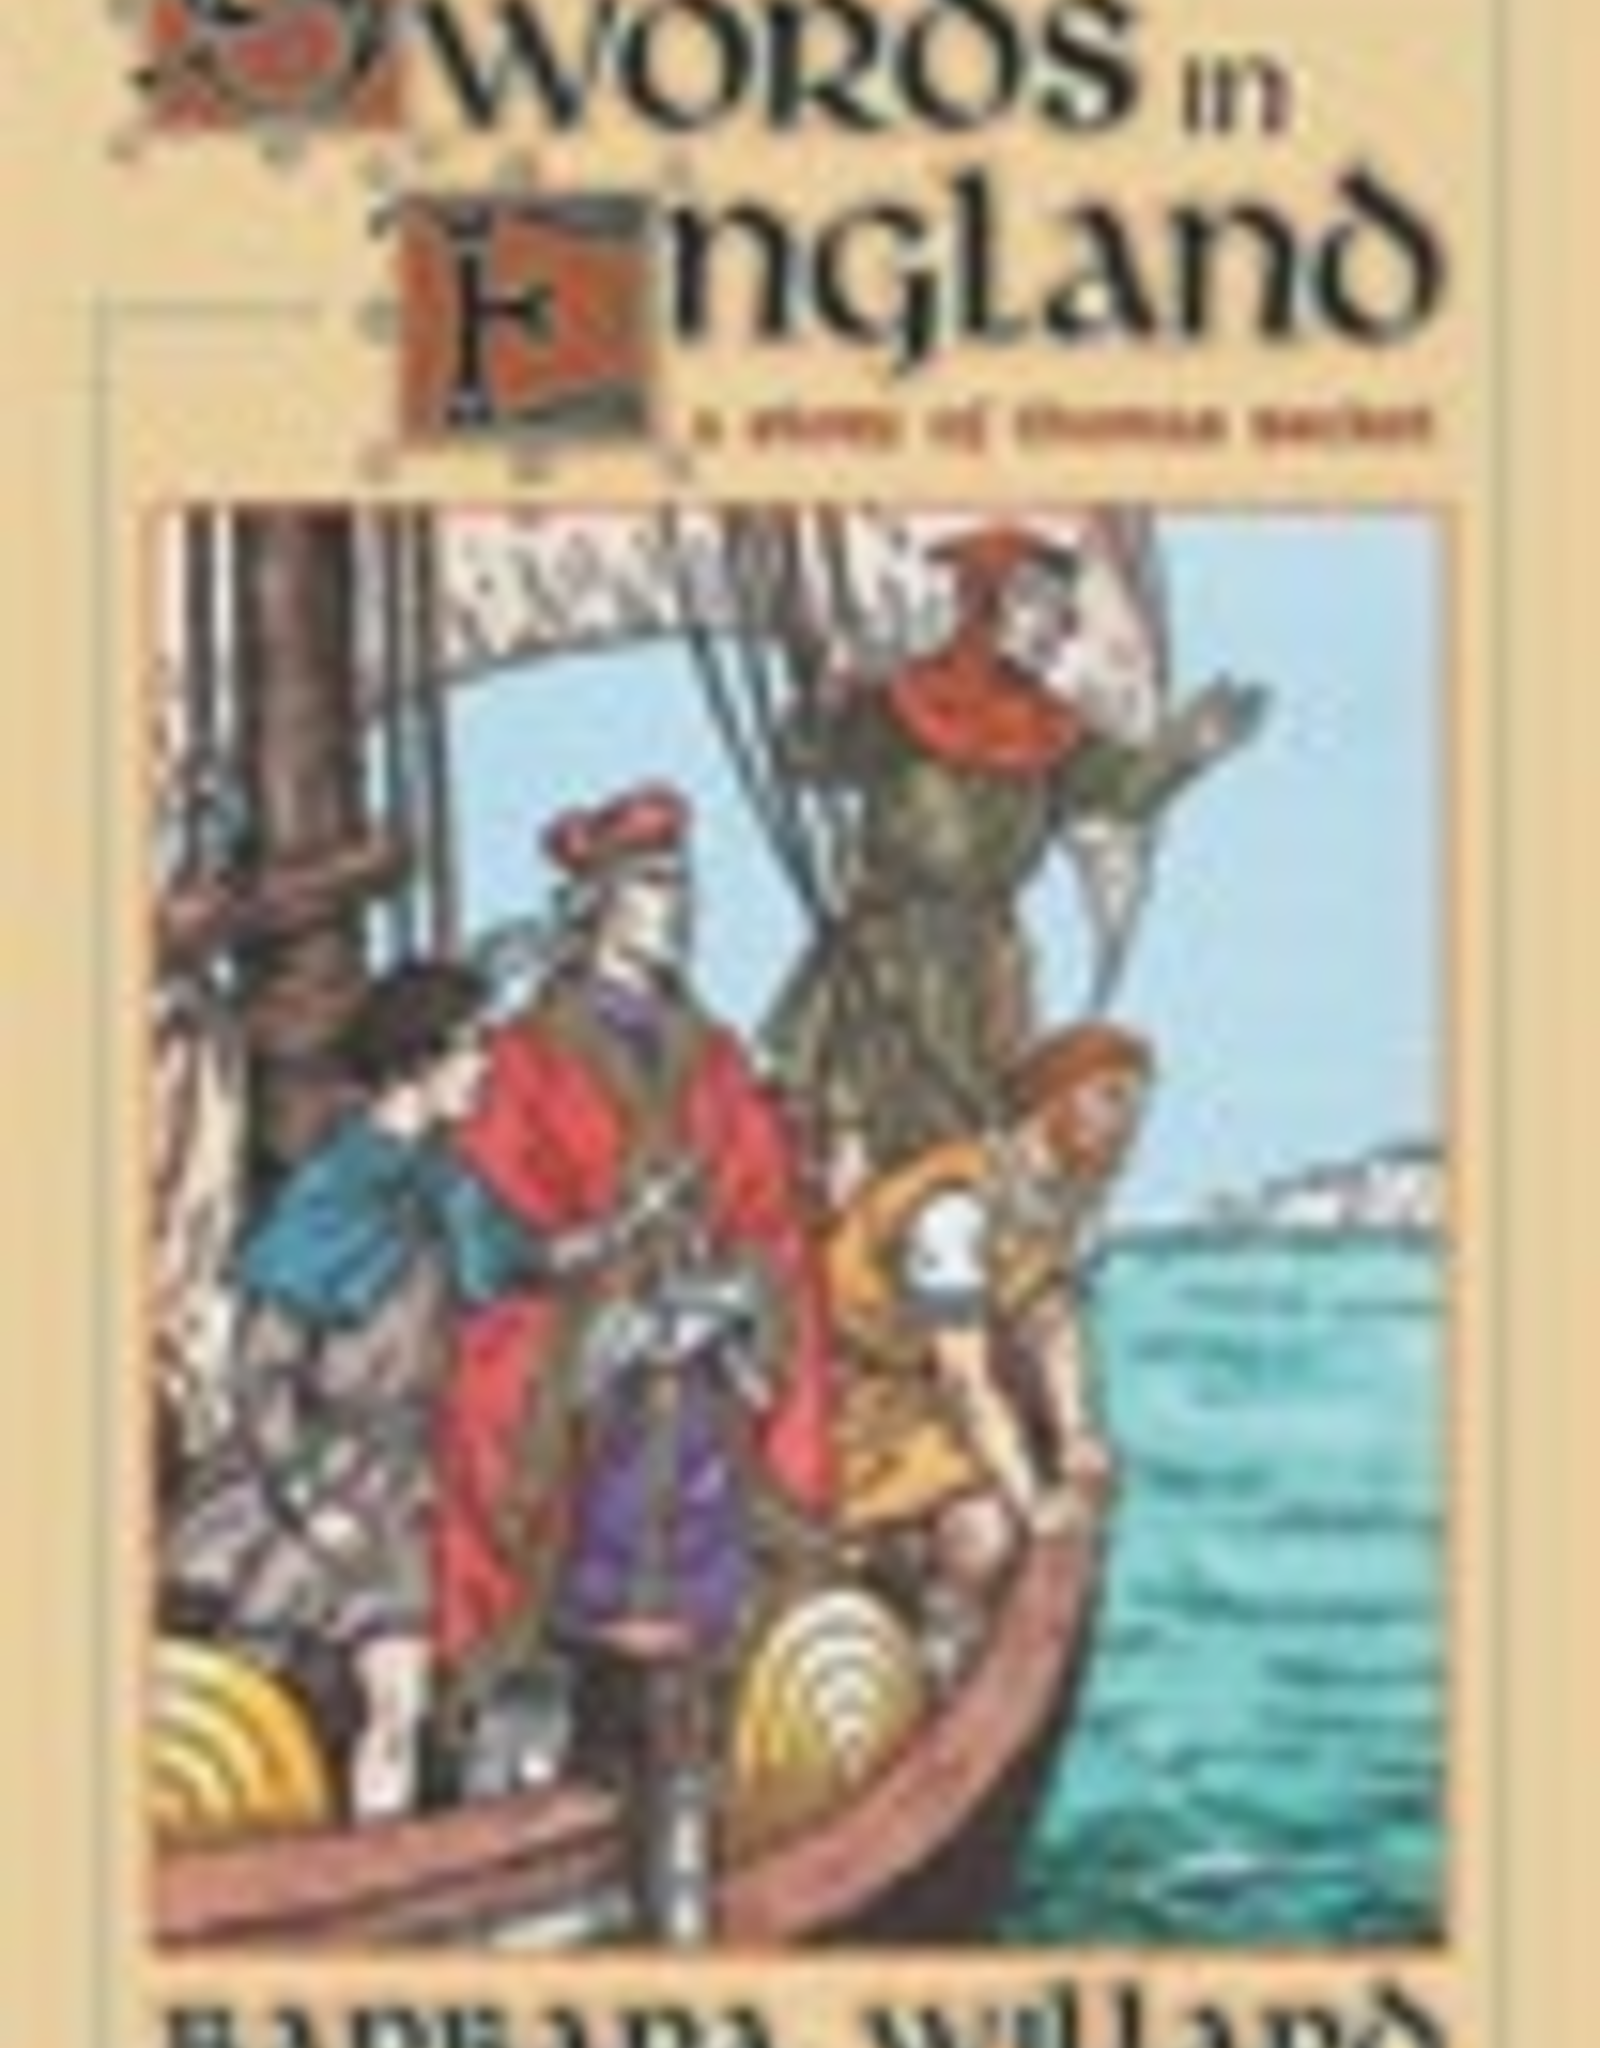 Ignatius Press If All the Swords in England, by Barbara Willard (paperback)